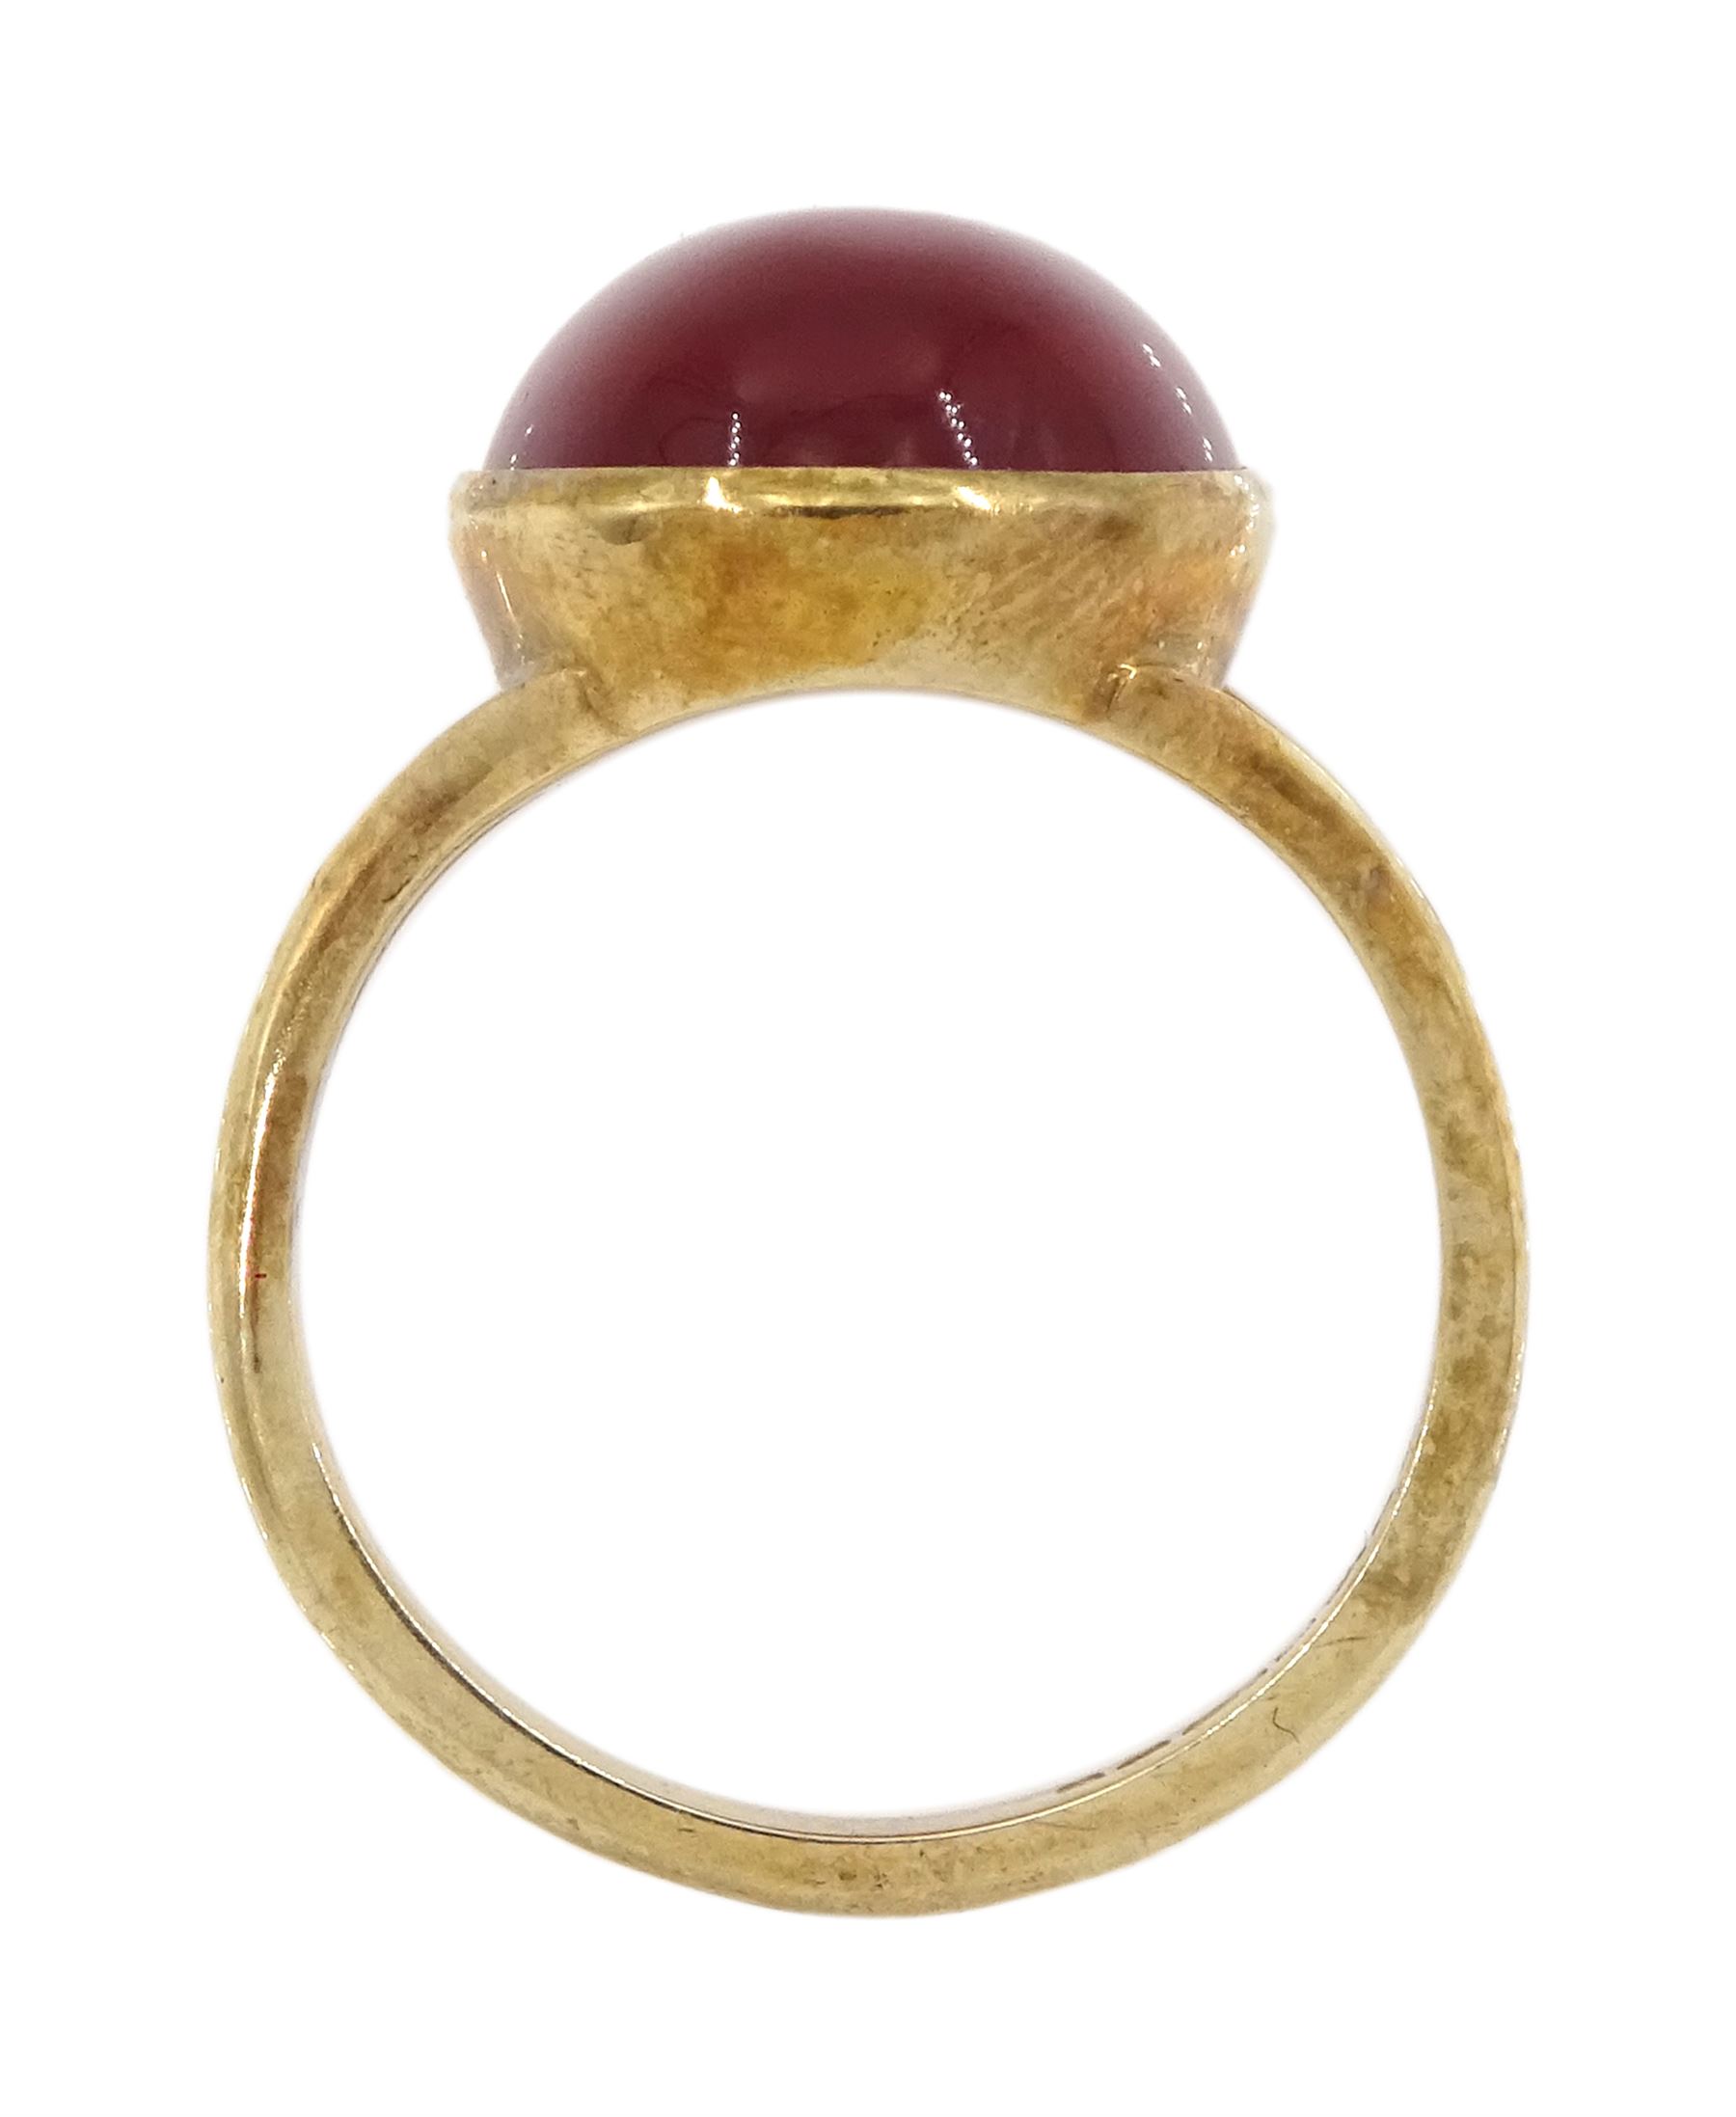 9ct gold single stone carnelian ring - Image 4 of 4